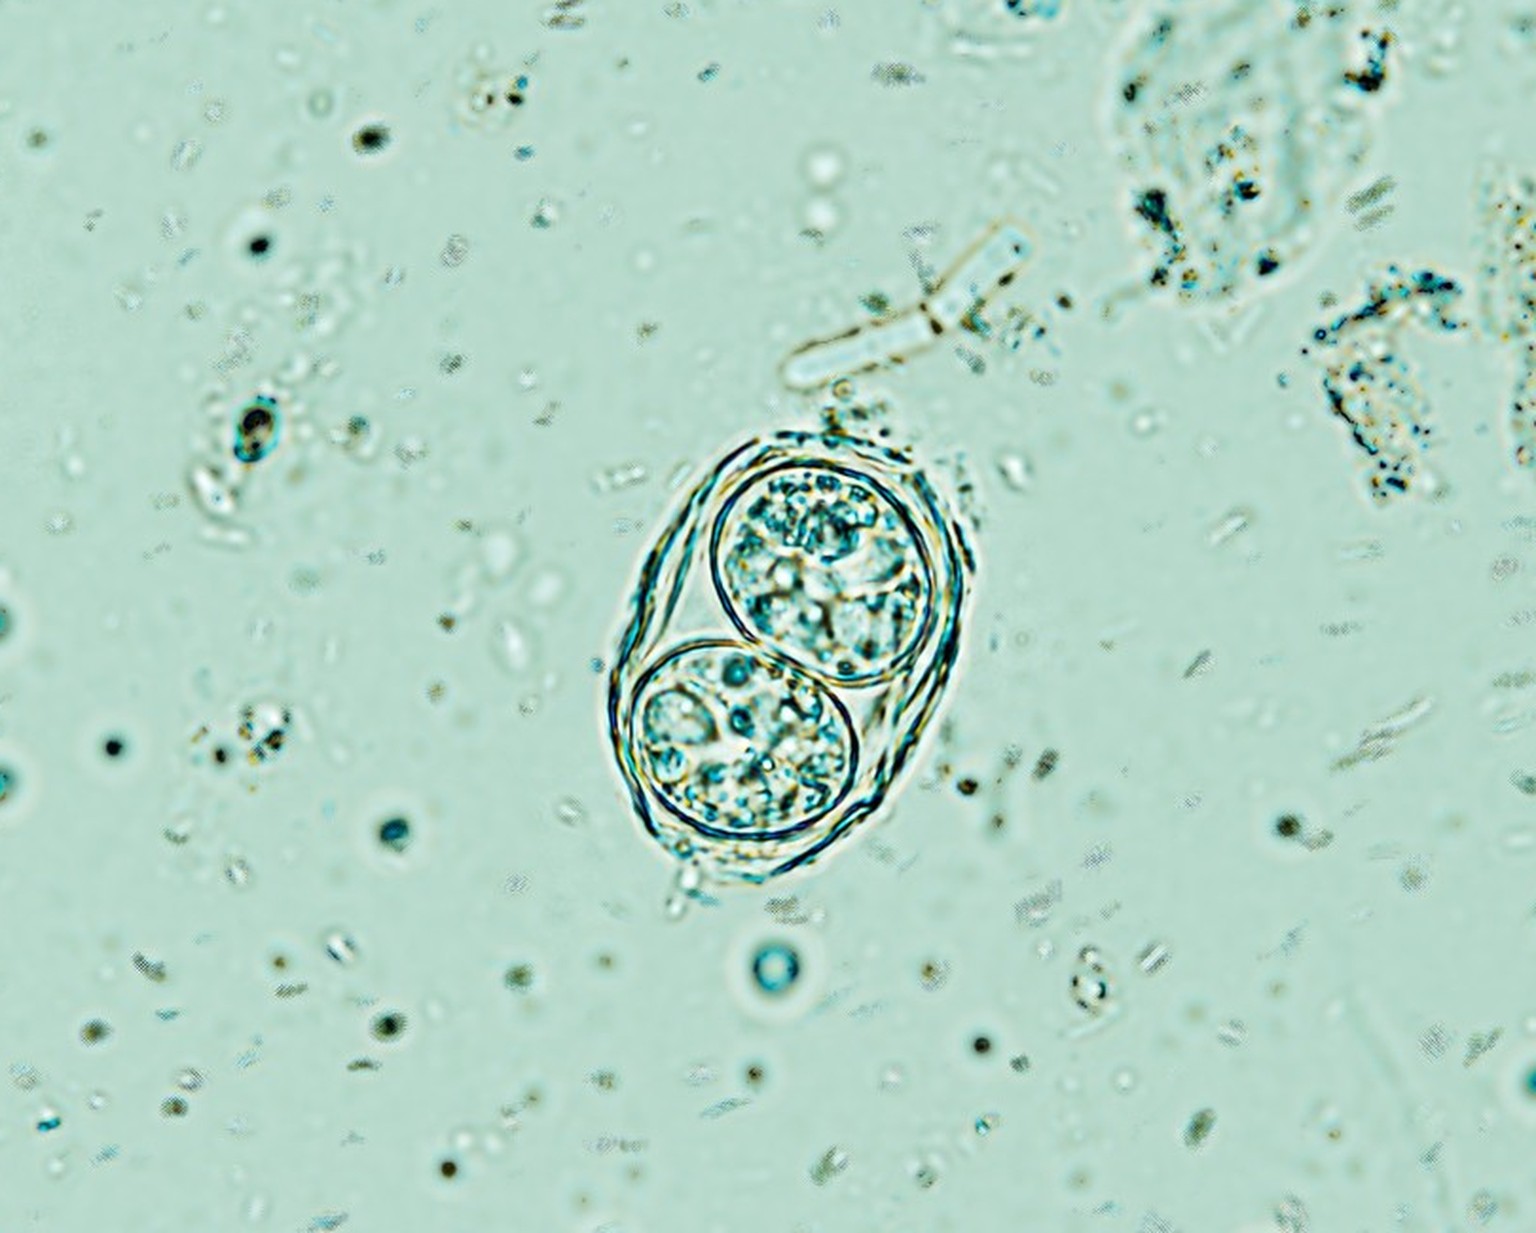 Oozyste von Toxoplasma gondii